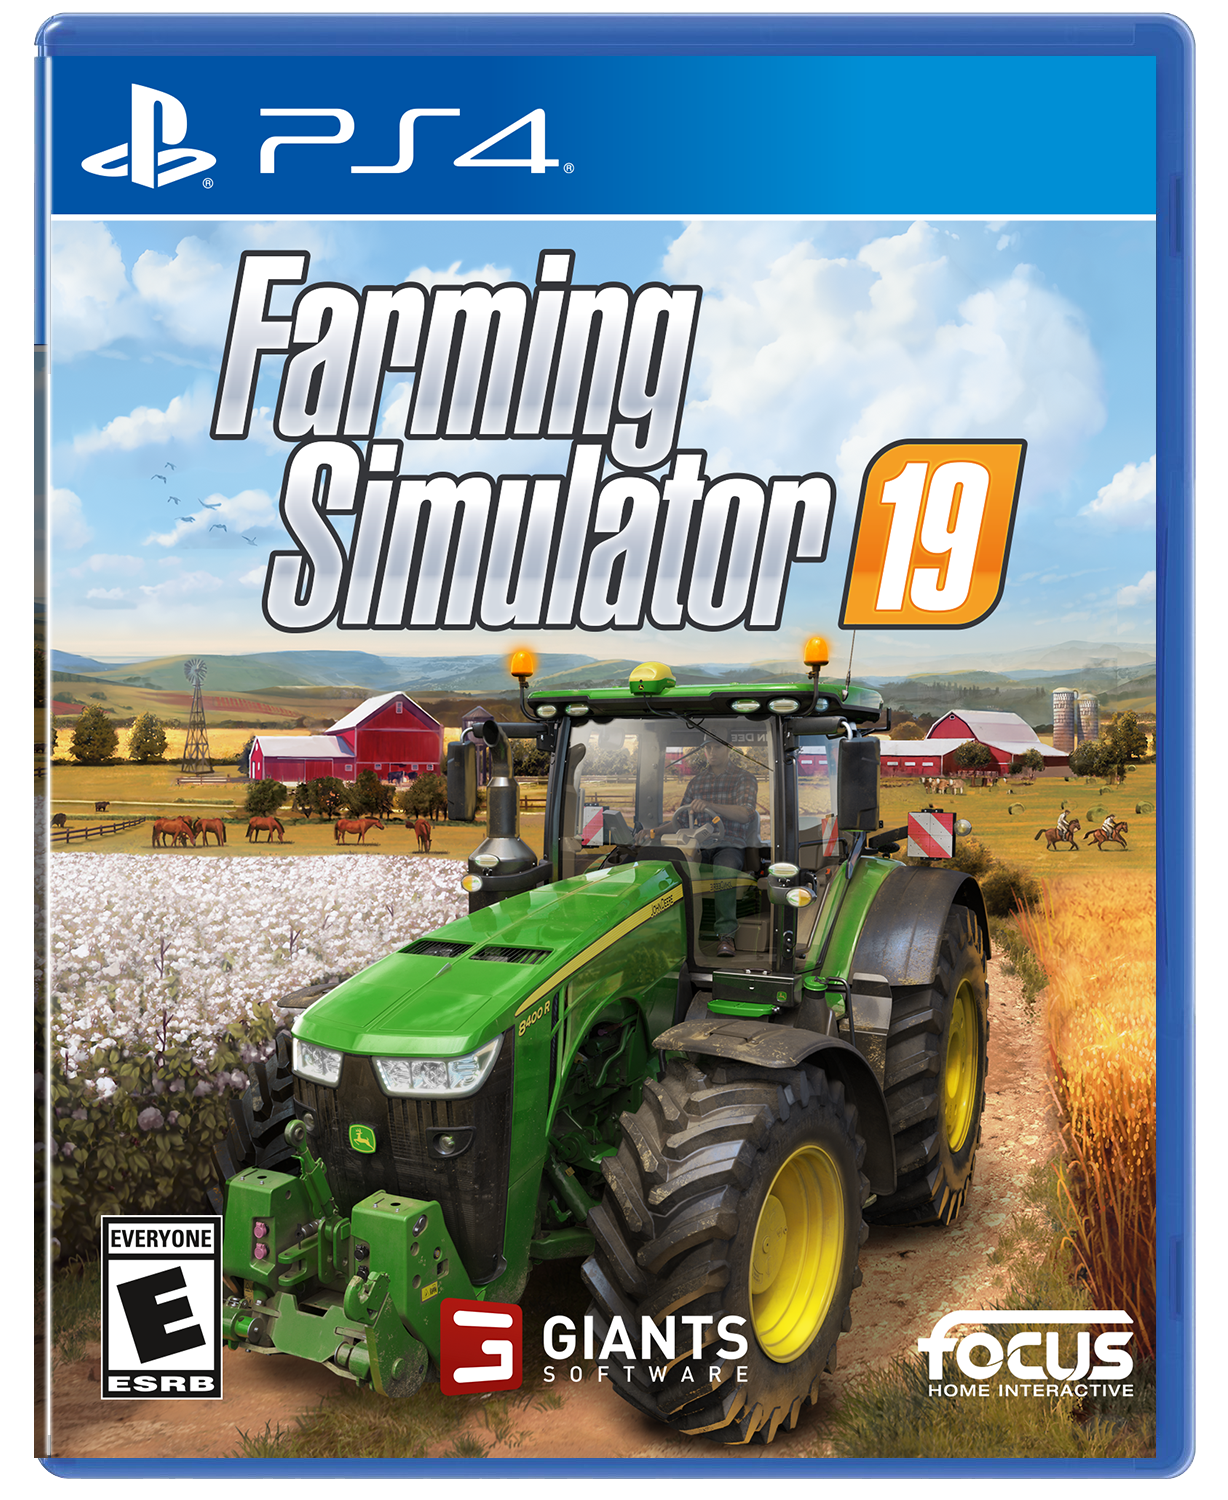 Clamp alliance cable Farming Simulator 19 - PlayStation 4 | PlayStation 4 | GameStop